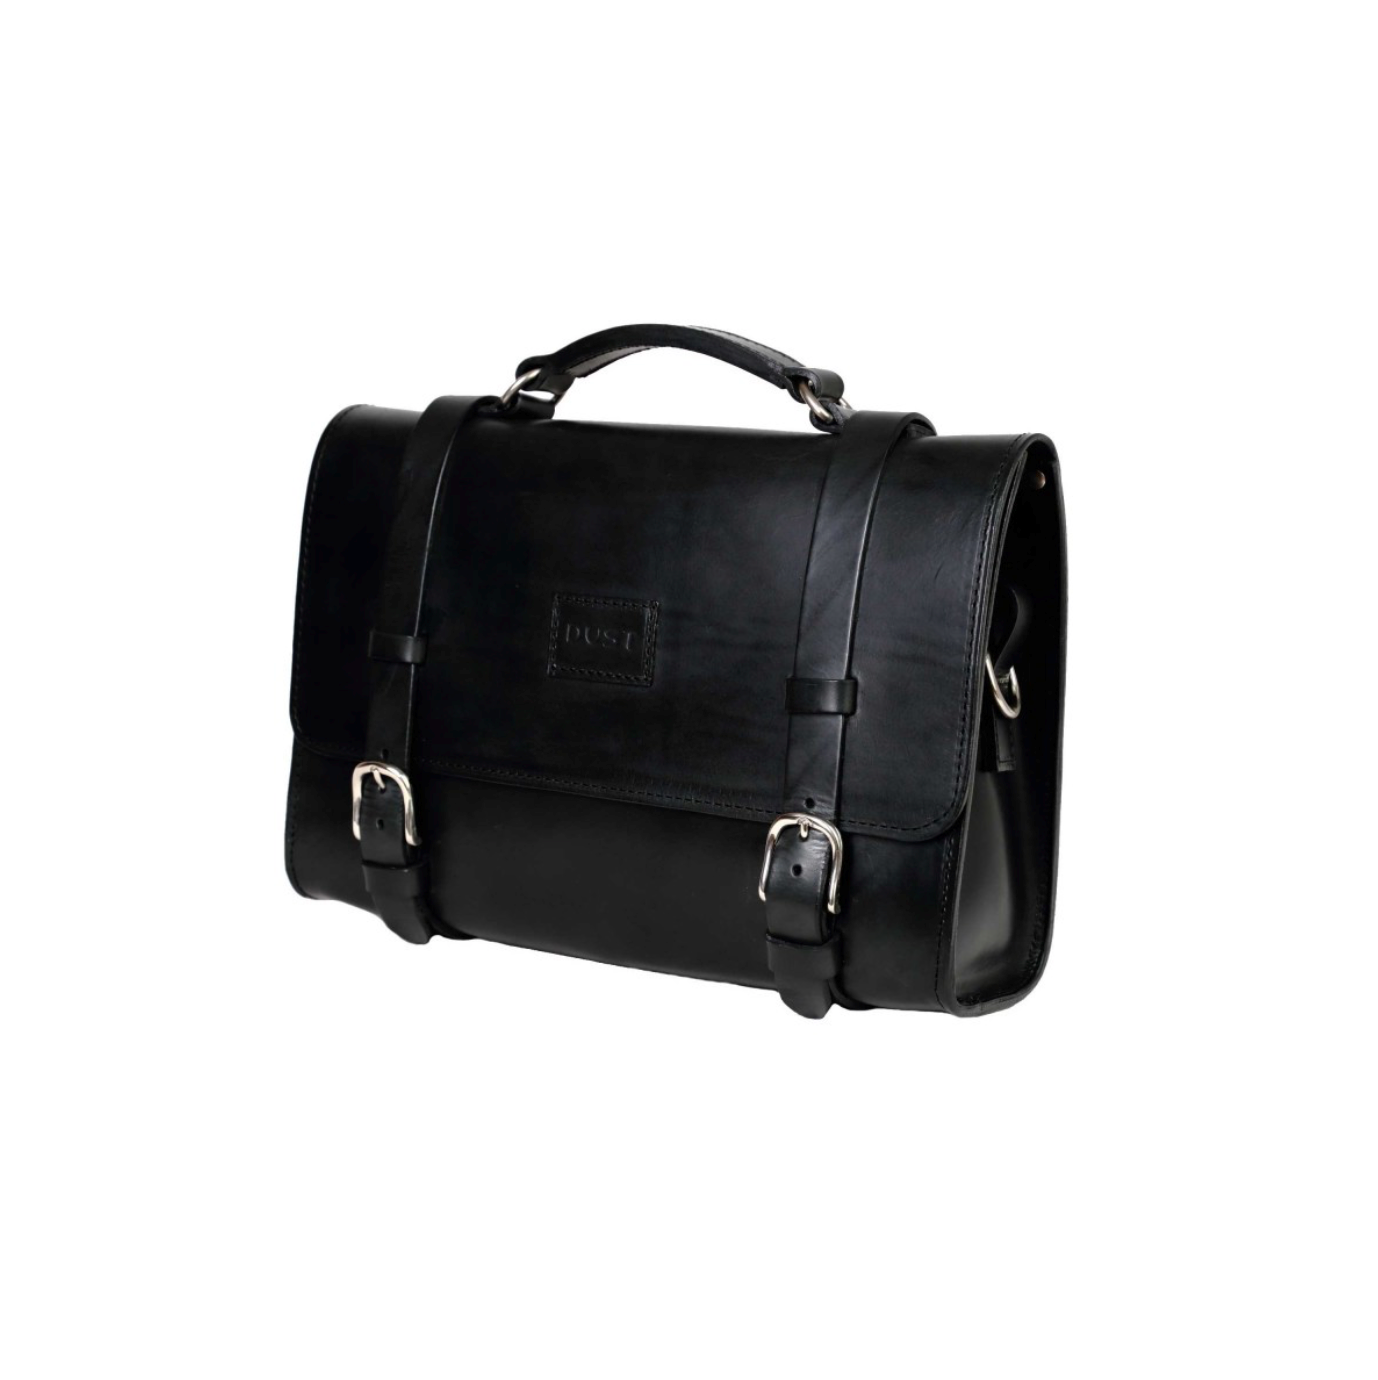 Mod 119 Business Bag Cuoio Black